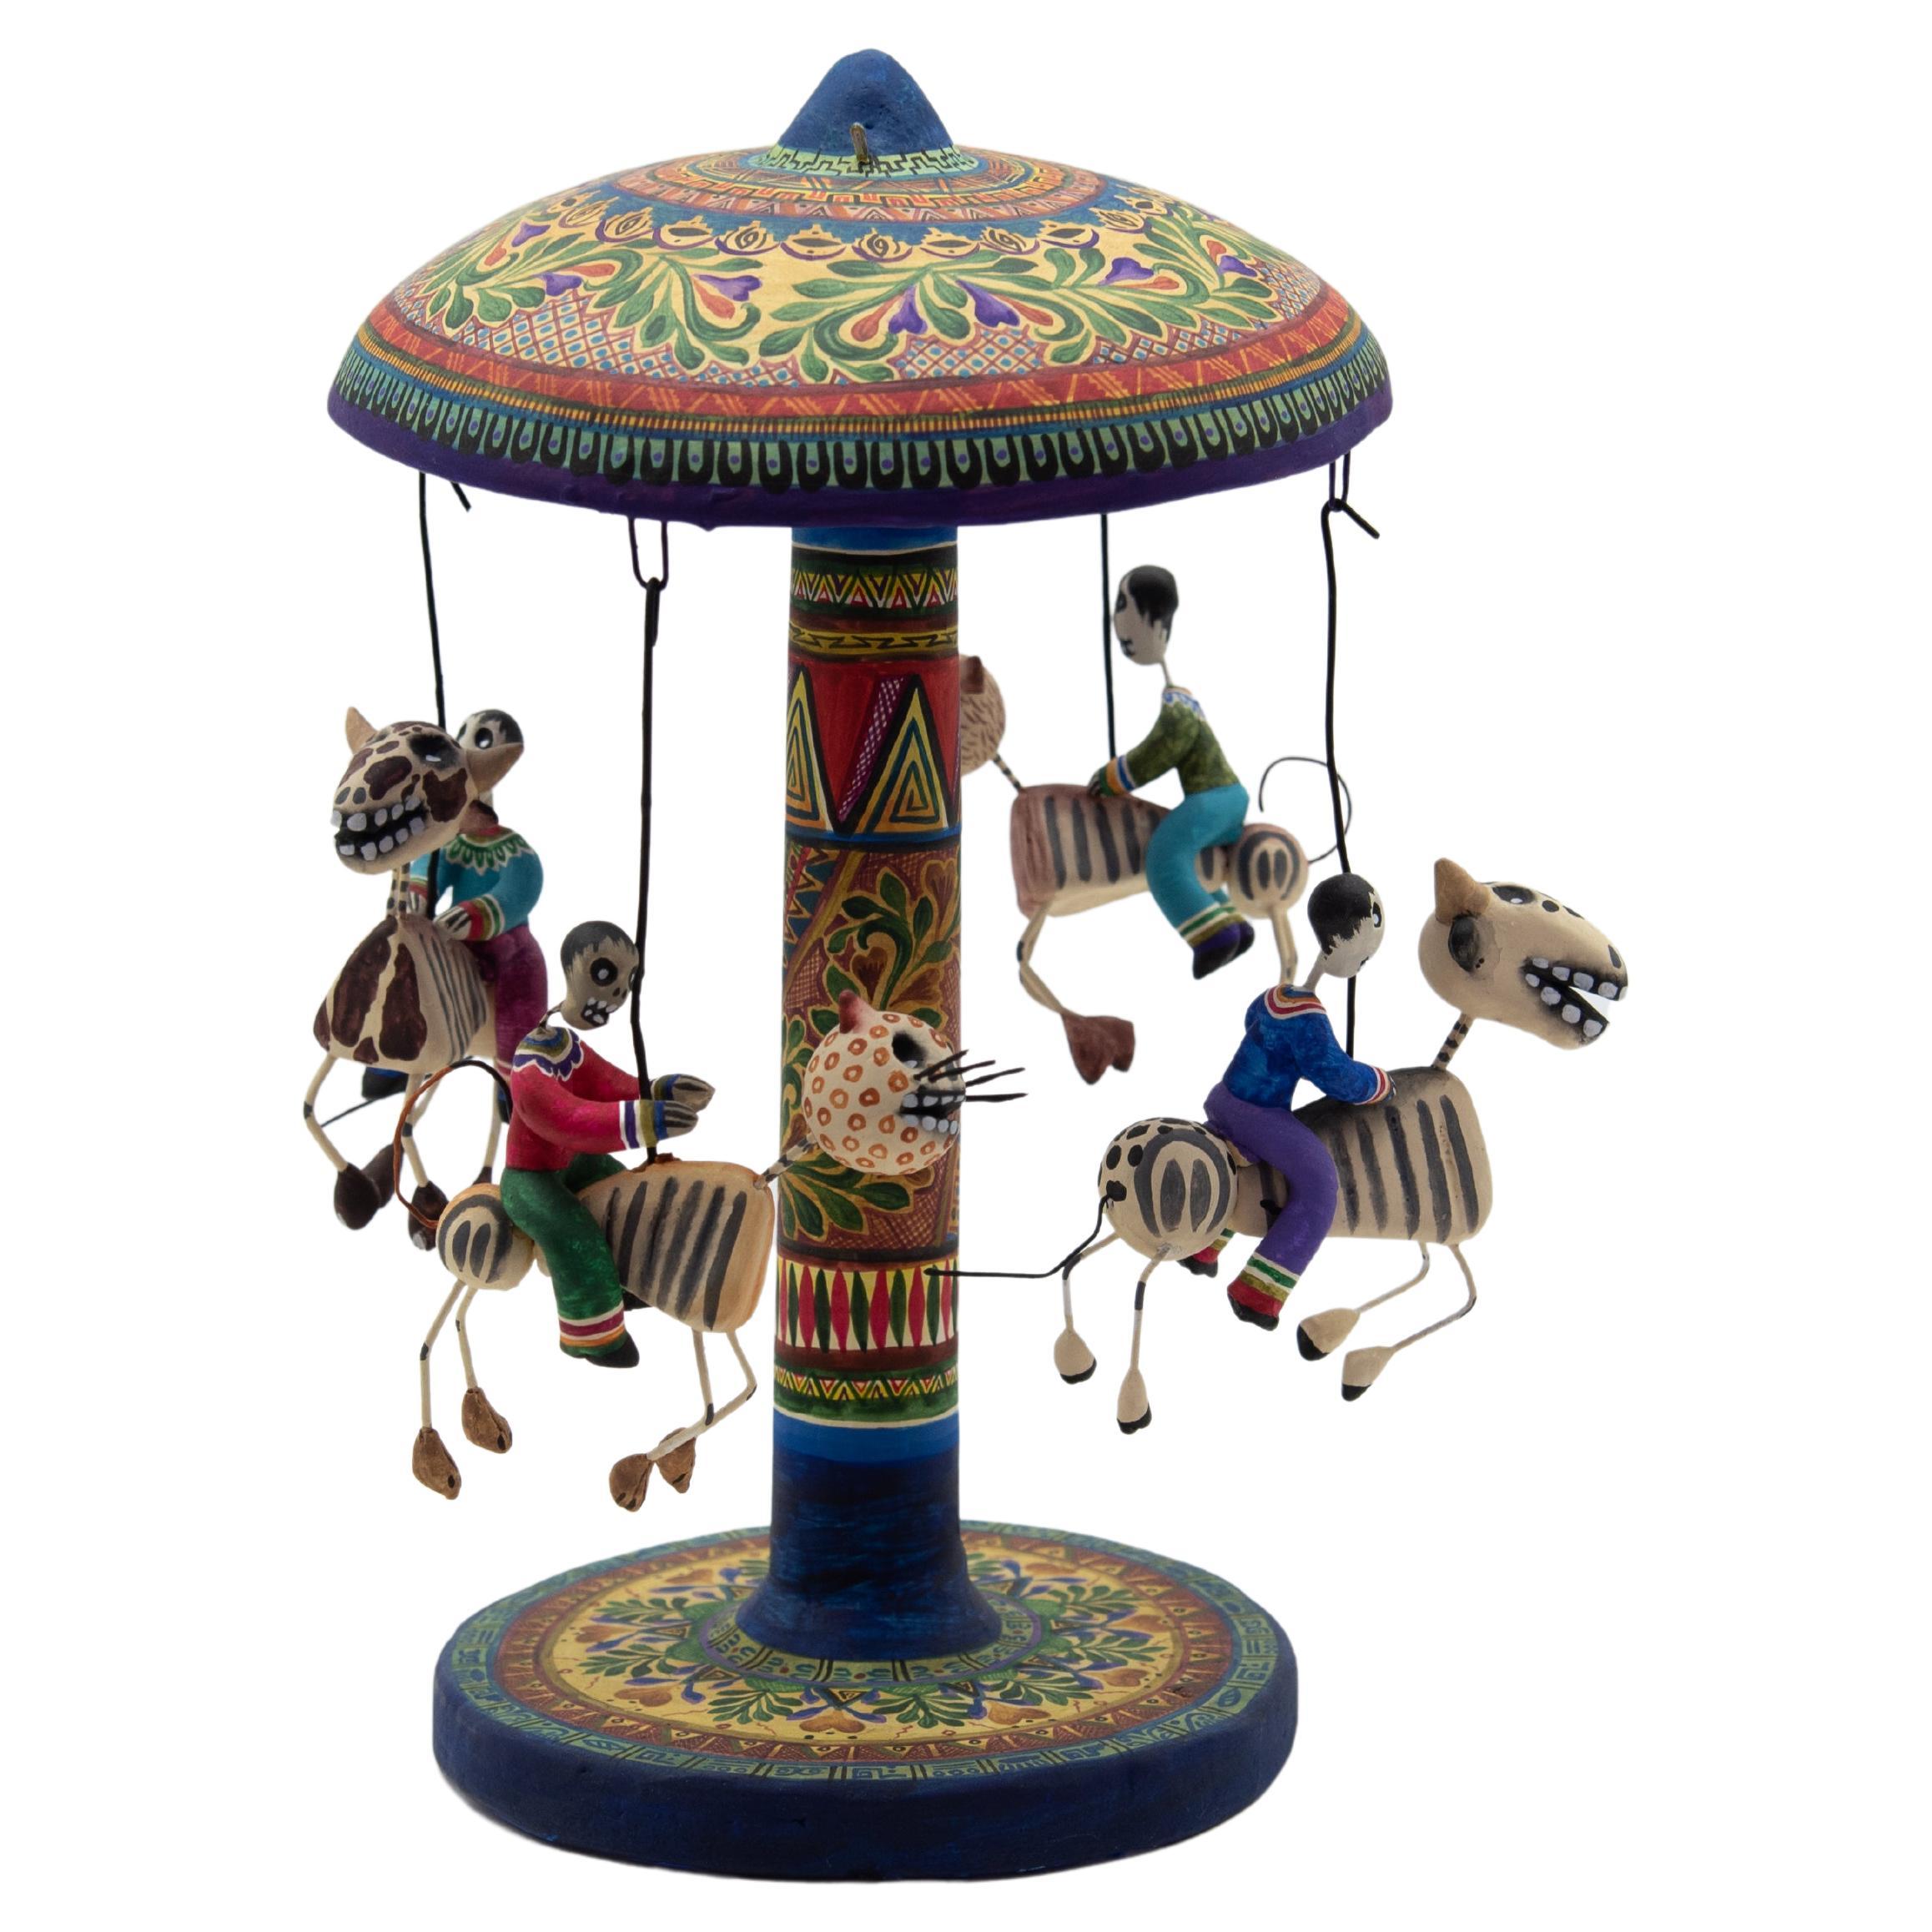 Carousel Day of the Dead Ceramic Mexican Folk Art by Familia Castillo  For Sale